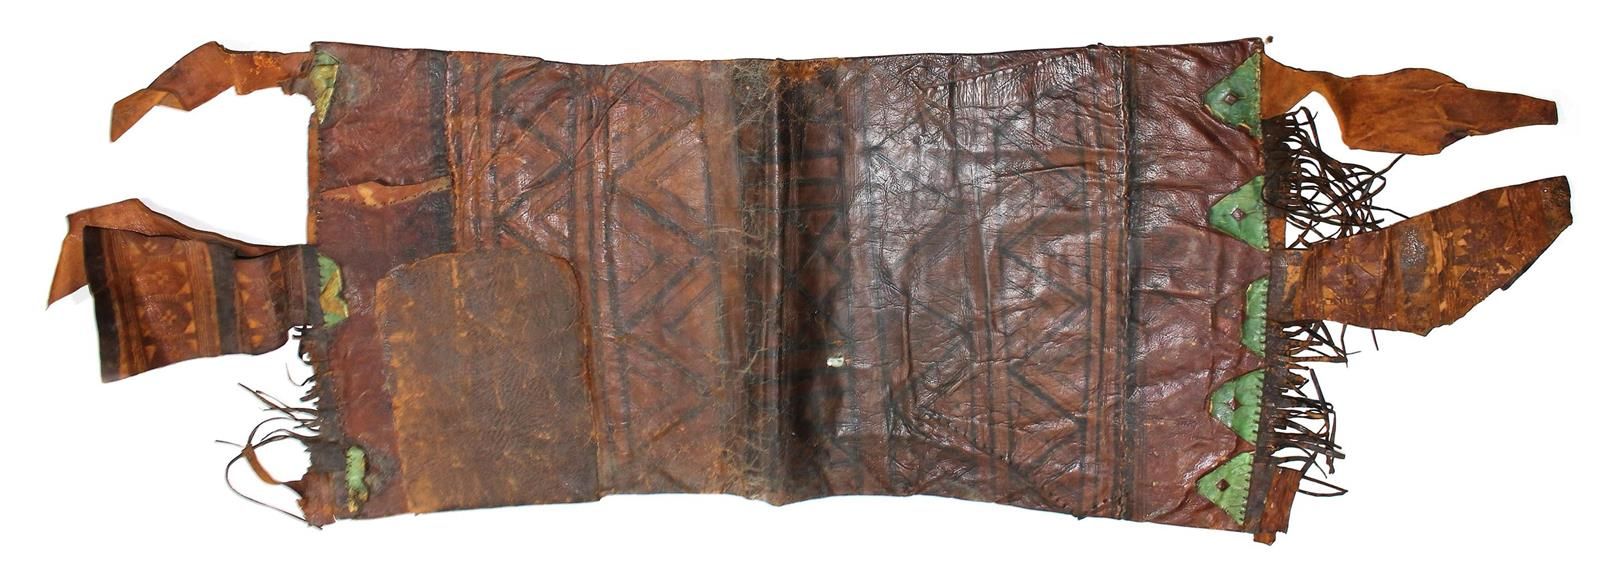 Antike Pferdedecke, Leder. 印度的皮革托架，可能是纳瓦罗。双层缝制的马鞍，软皮，带有几何形状的黑色绘画遗迹。底下有残留的流苏和铜质贴花&hellip;